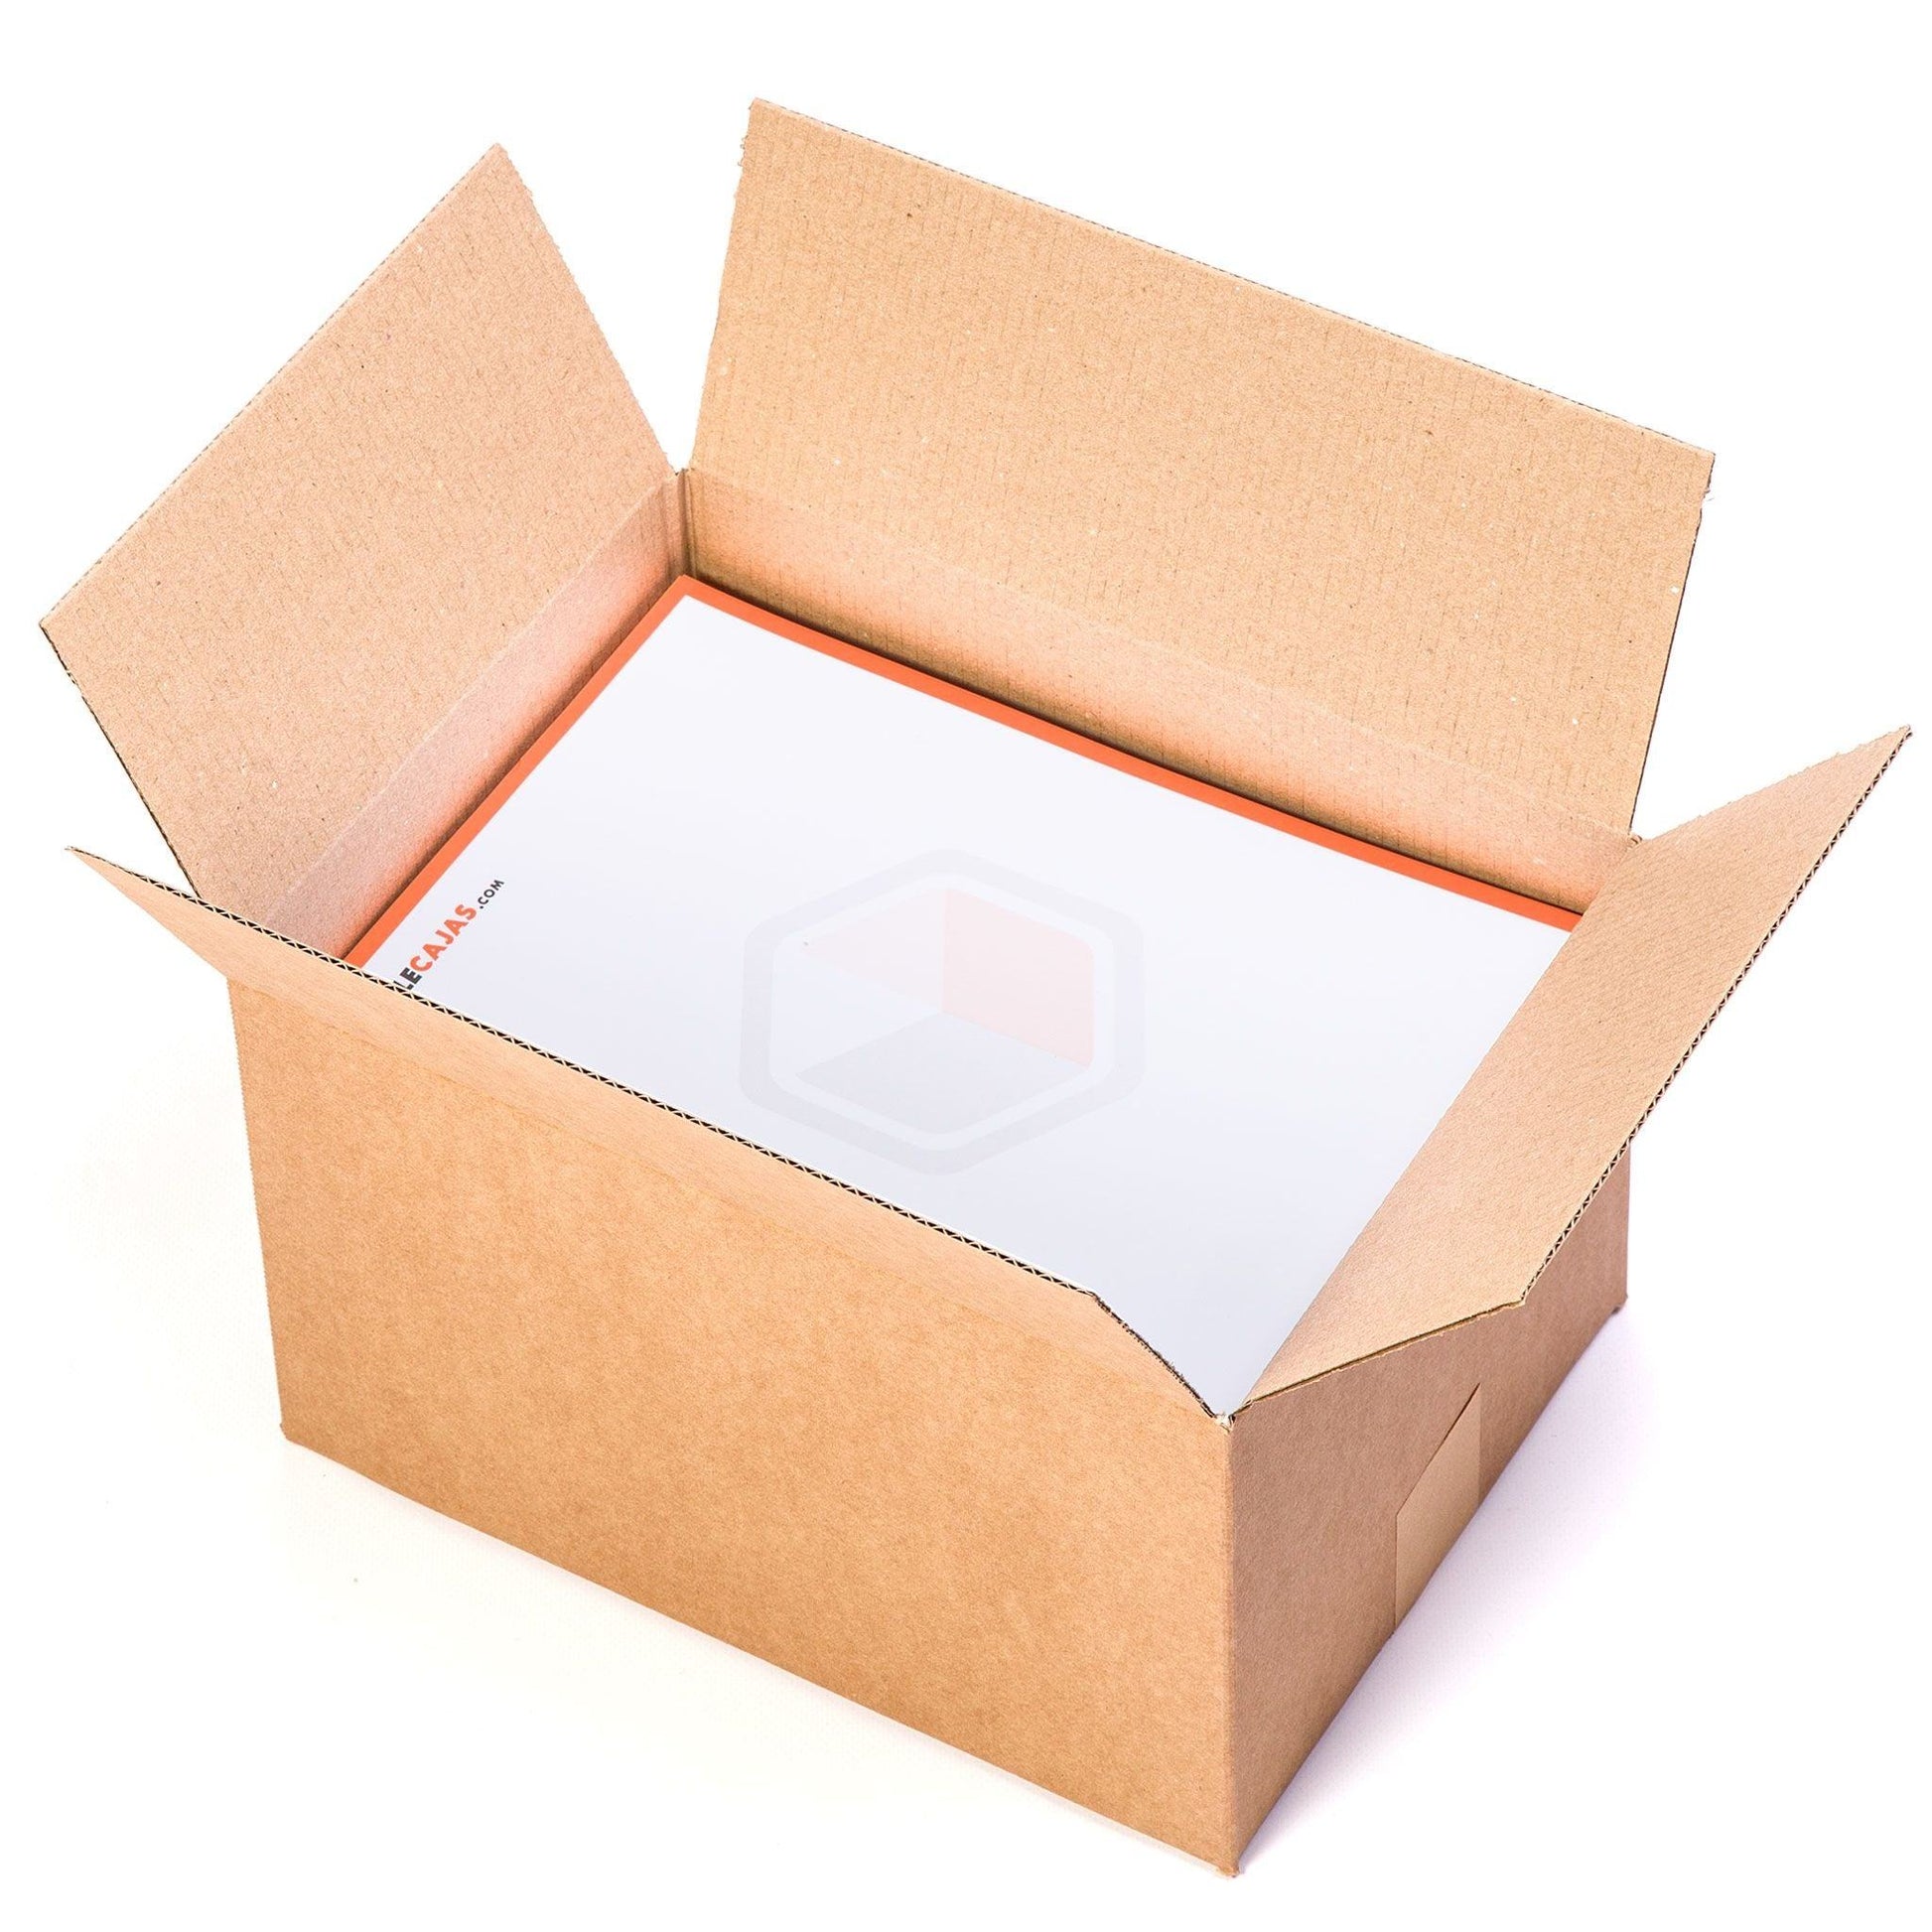 Caja Postal Envio paquetes pequena | DCBOX1220 | 305x228x183